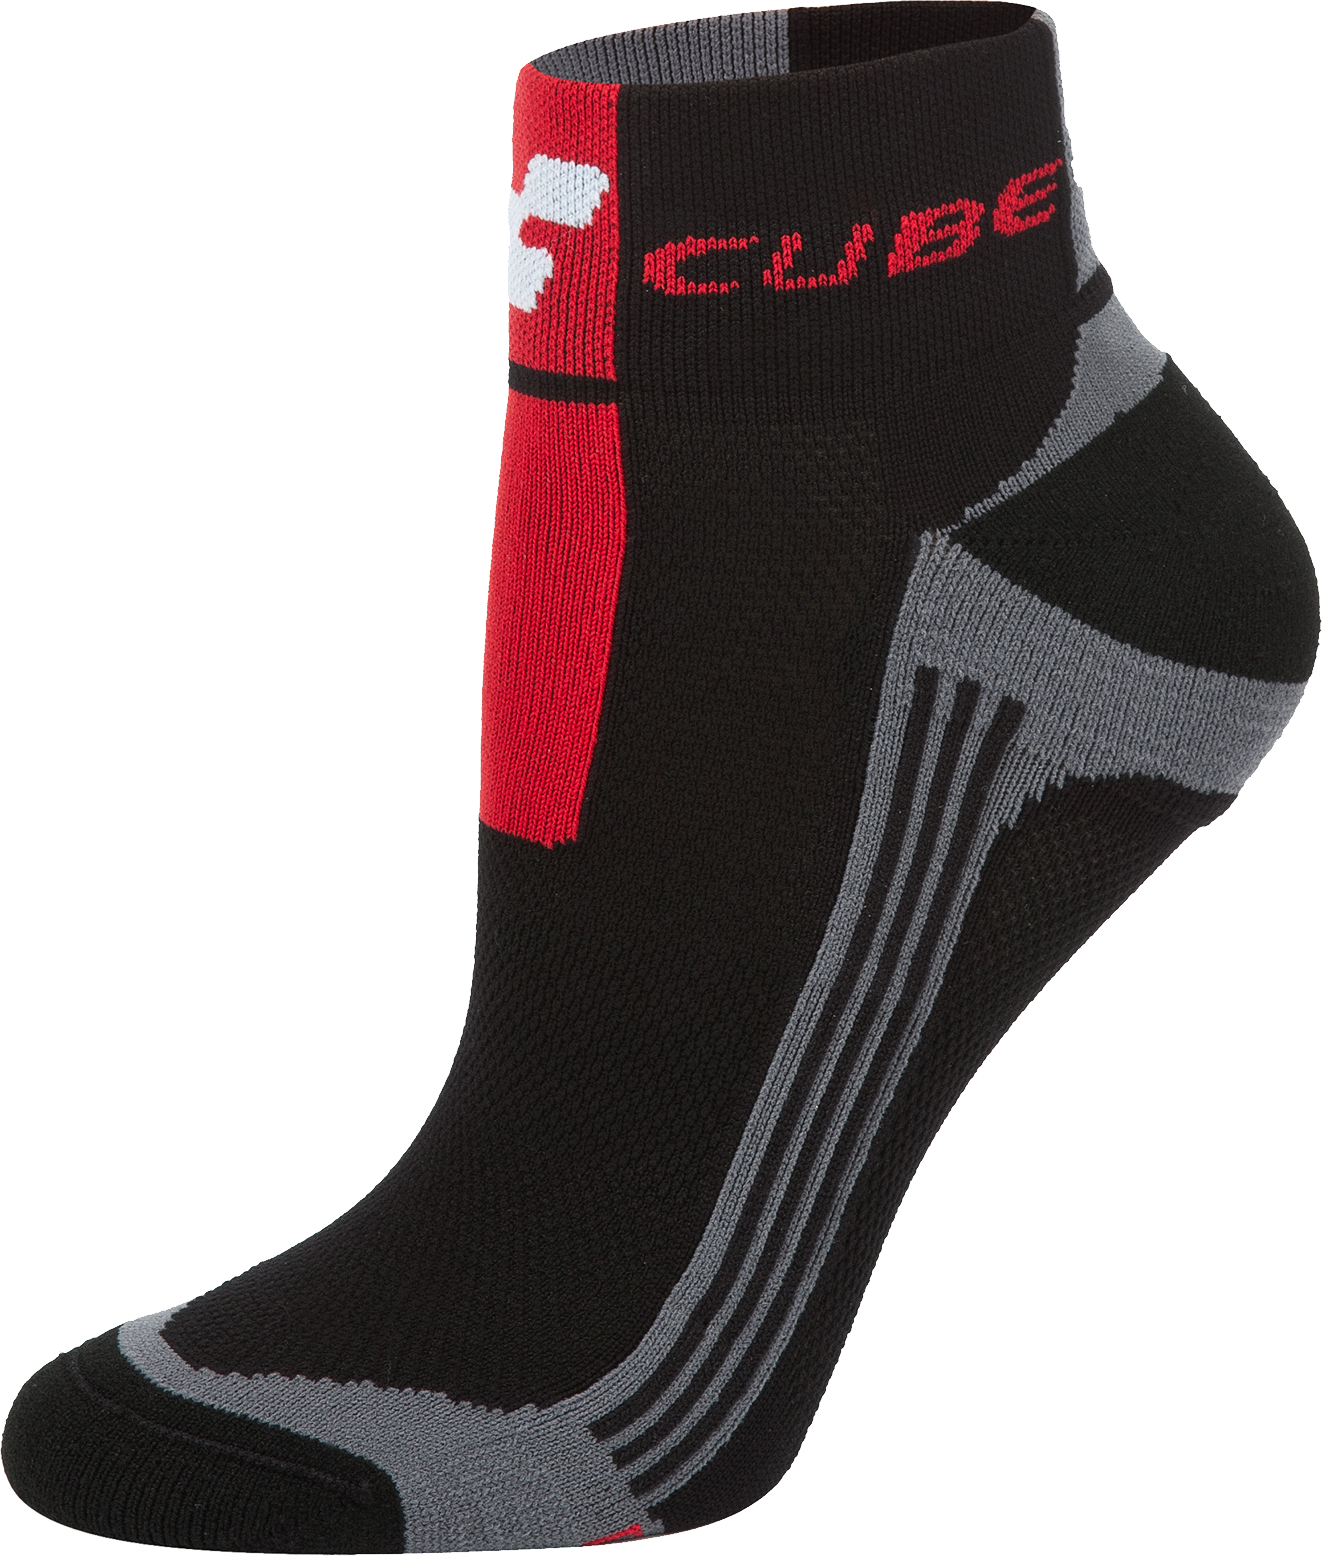 Cube Black Socks PNG Image